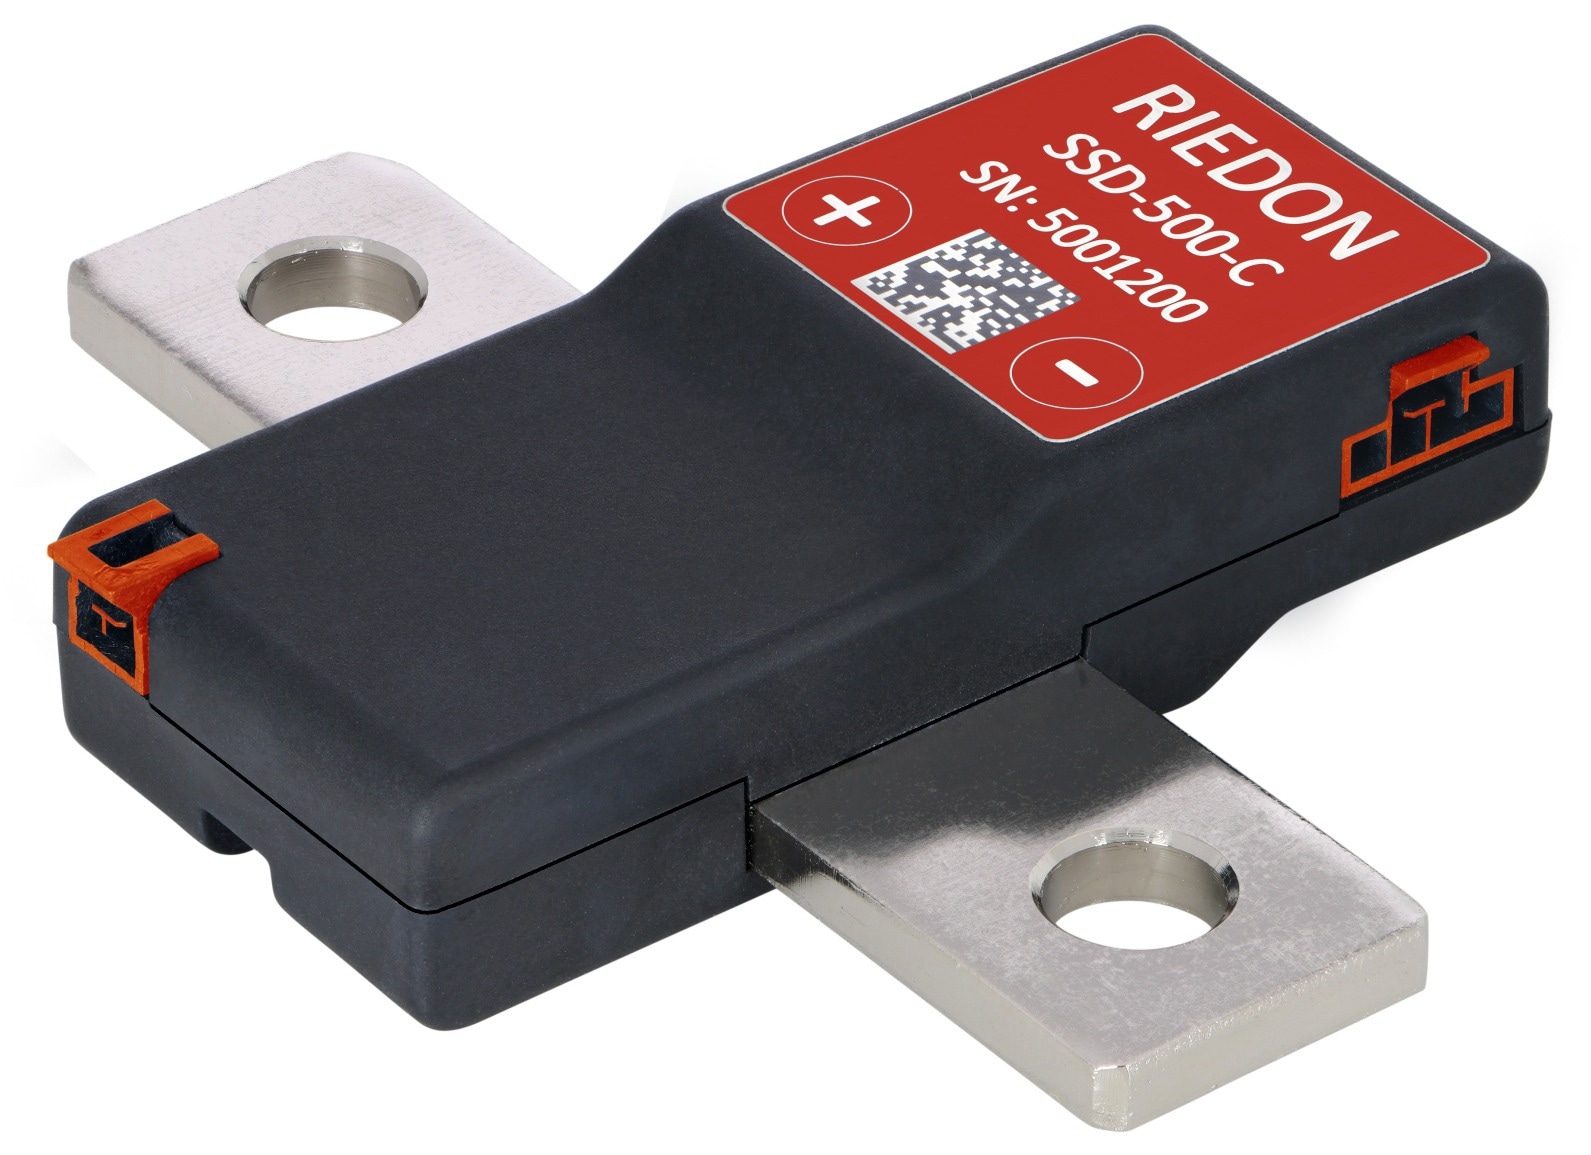 Riedon Unveils Digital DC Current Sensors - Making Current Measurement Even Easier